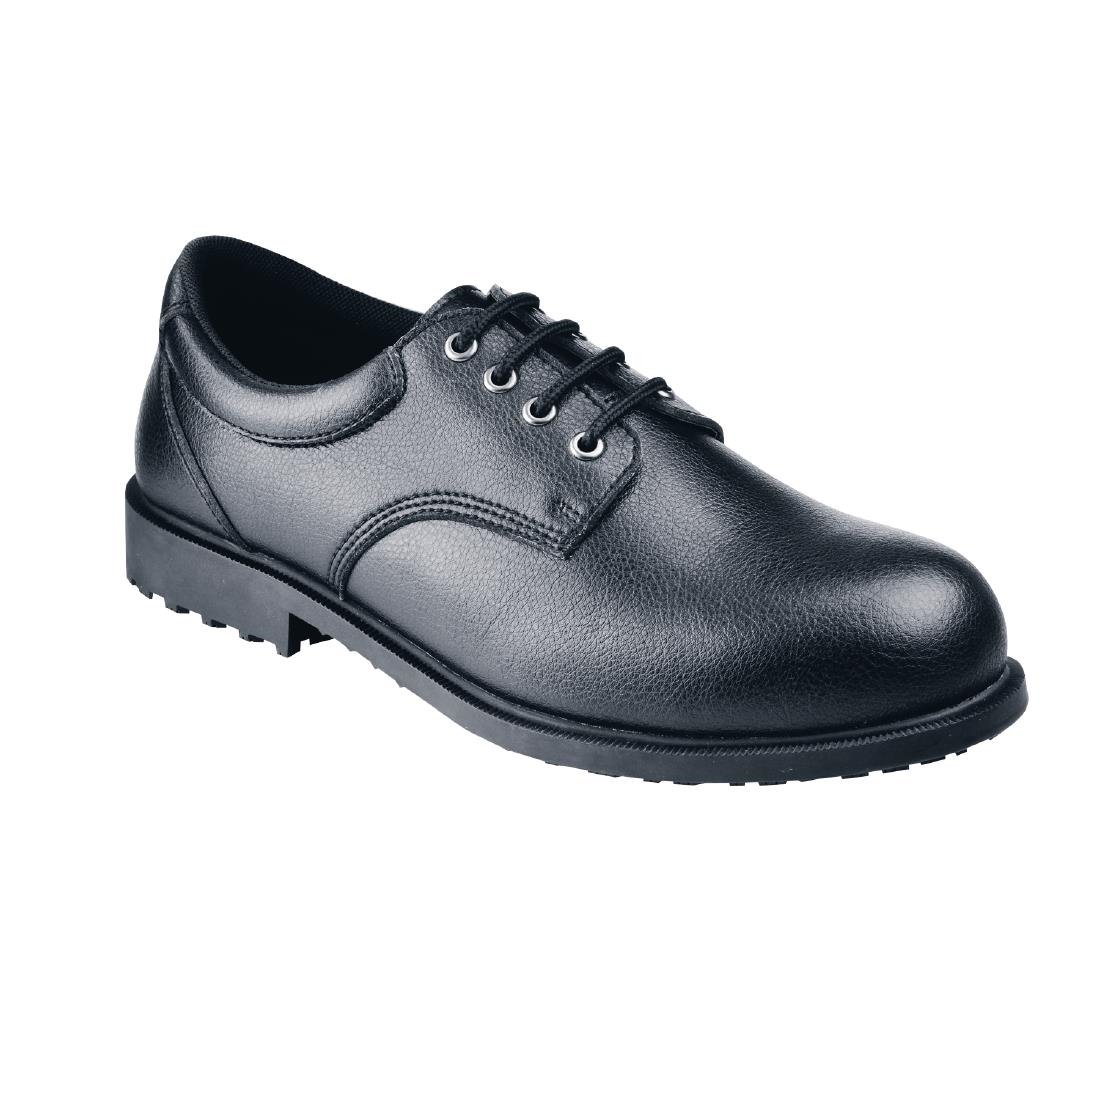 BB611-41 Shoes for Crews Cambridge Steel Toe Dress Shoe Size 41